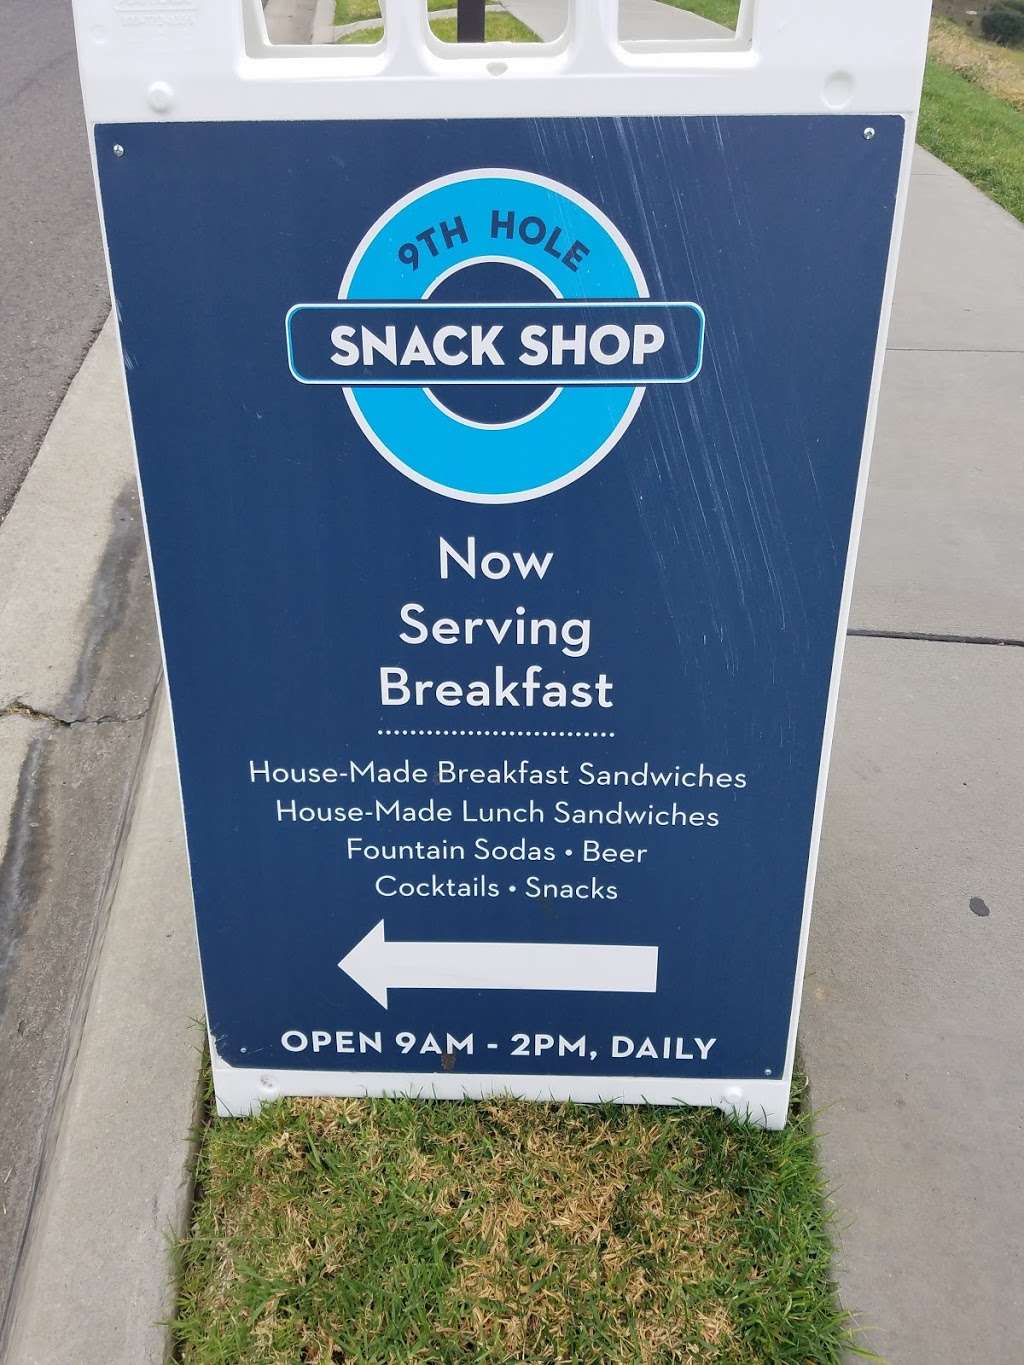 9th Hole Snack Shop | Brienwood Dr, Escondido, CA 92026, USA